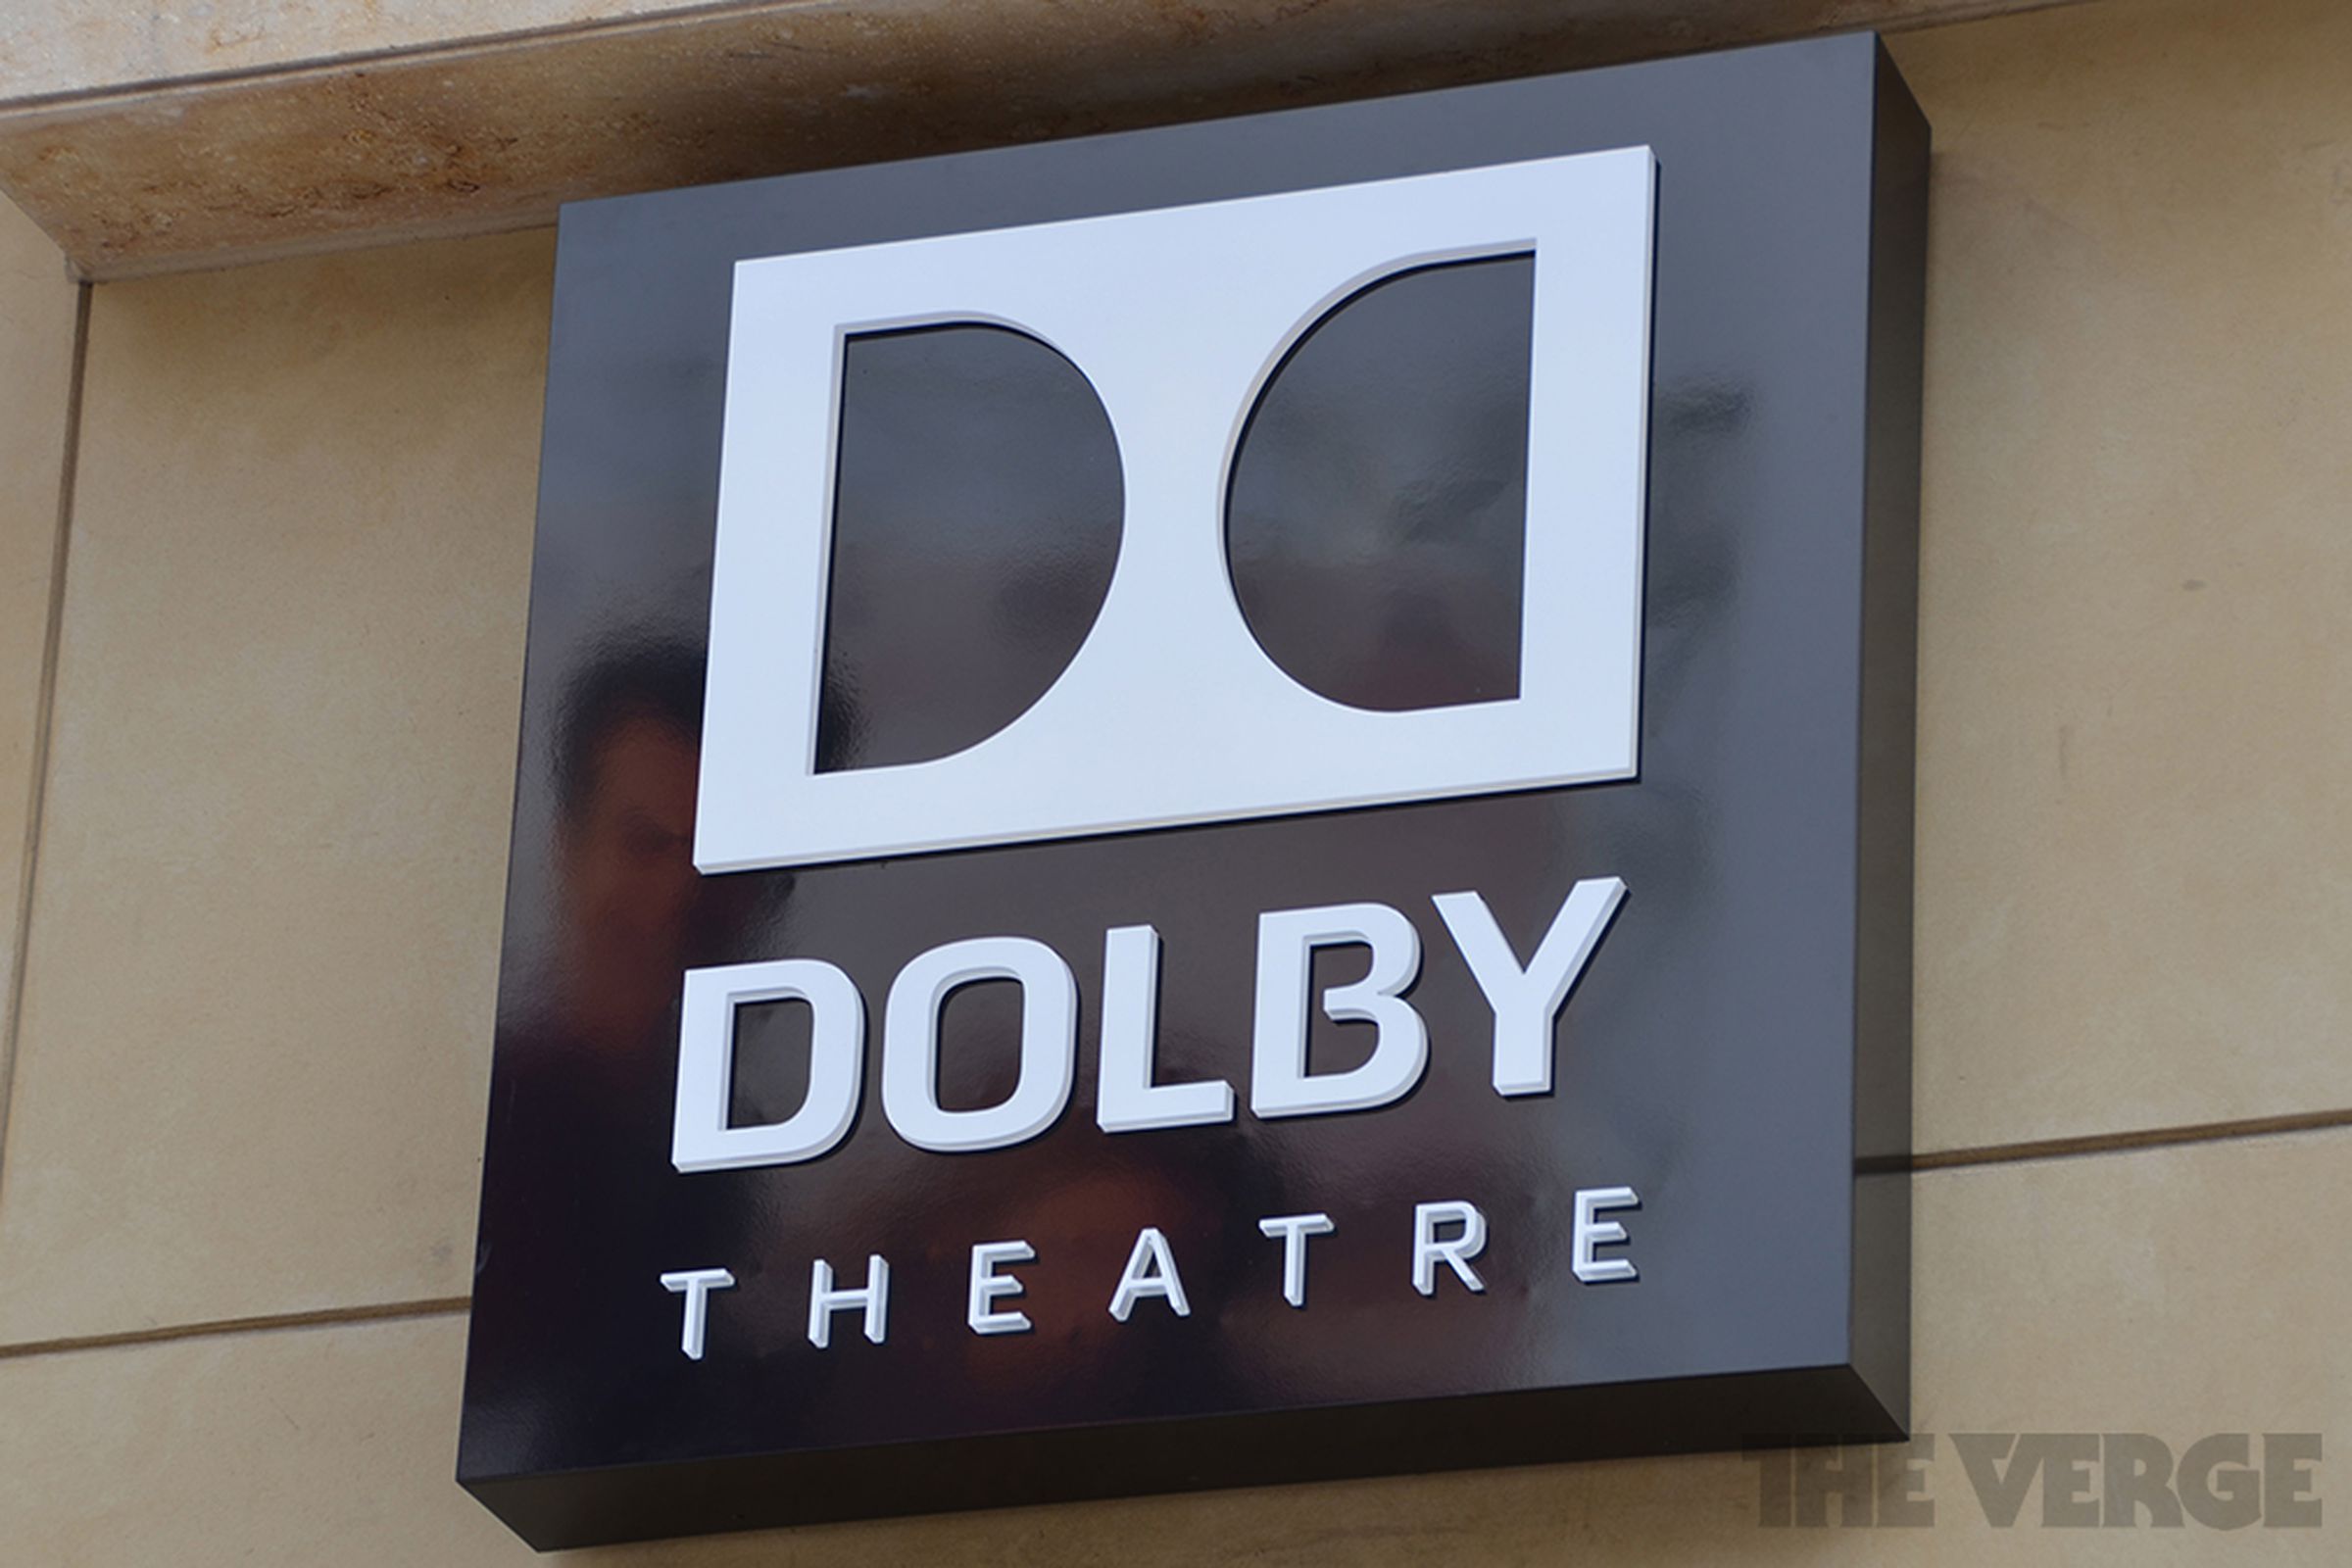 Dolby Theatre logo